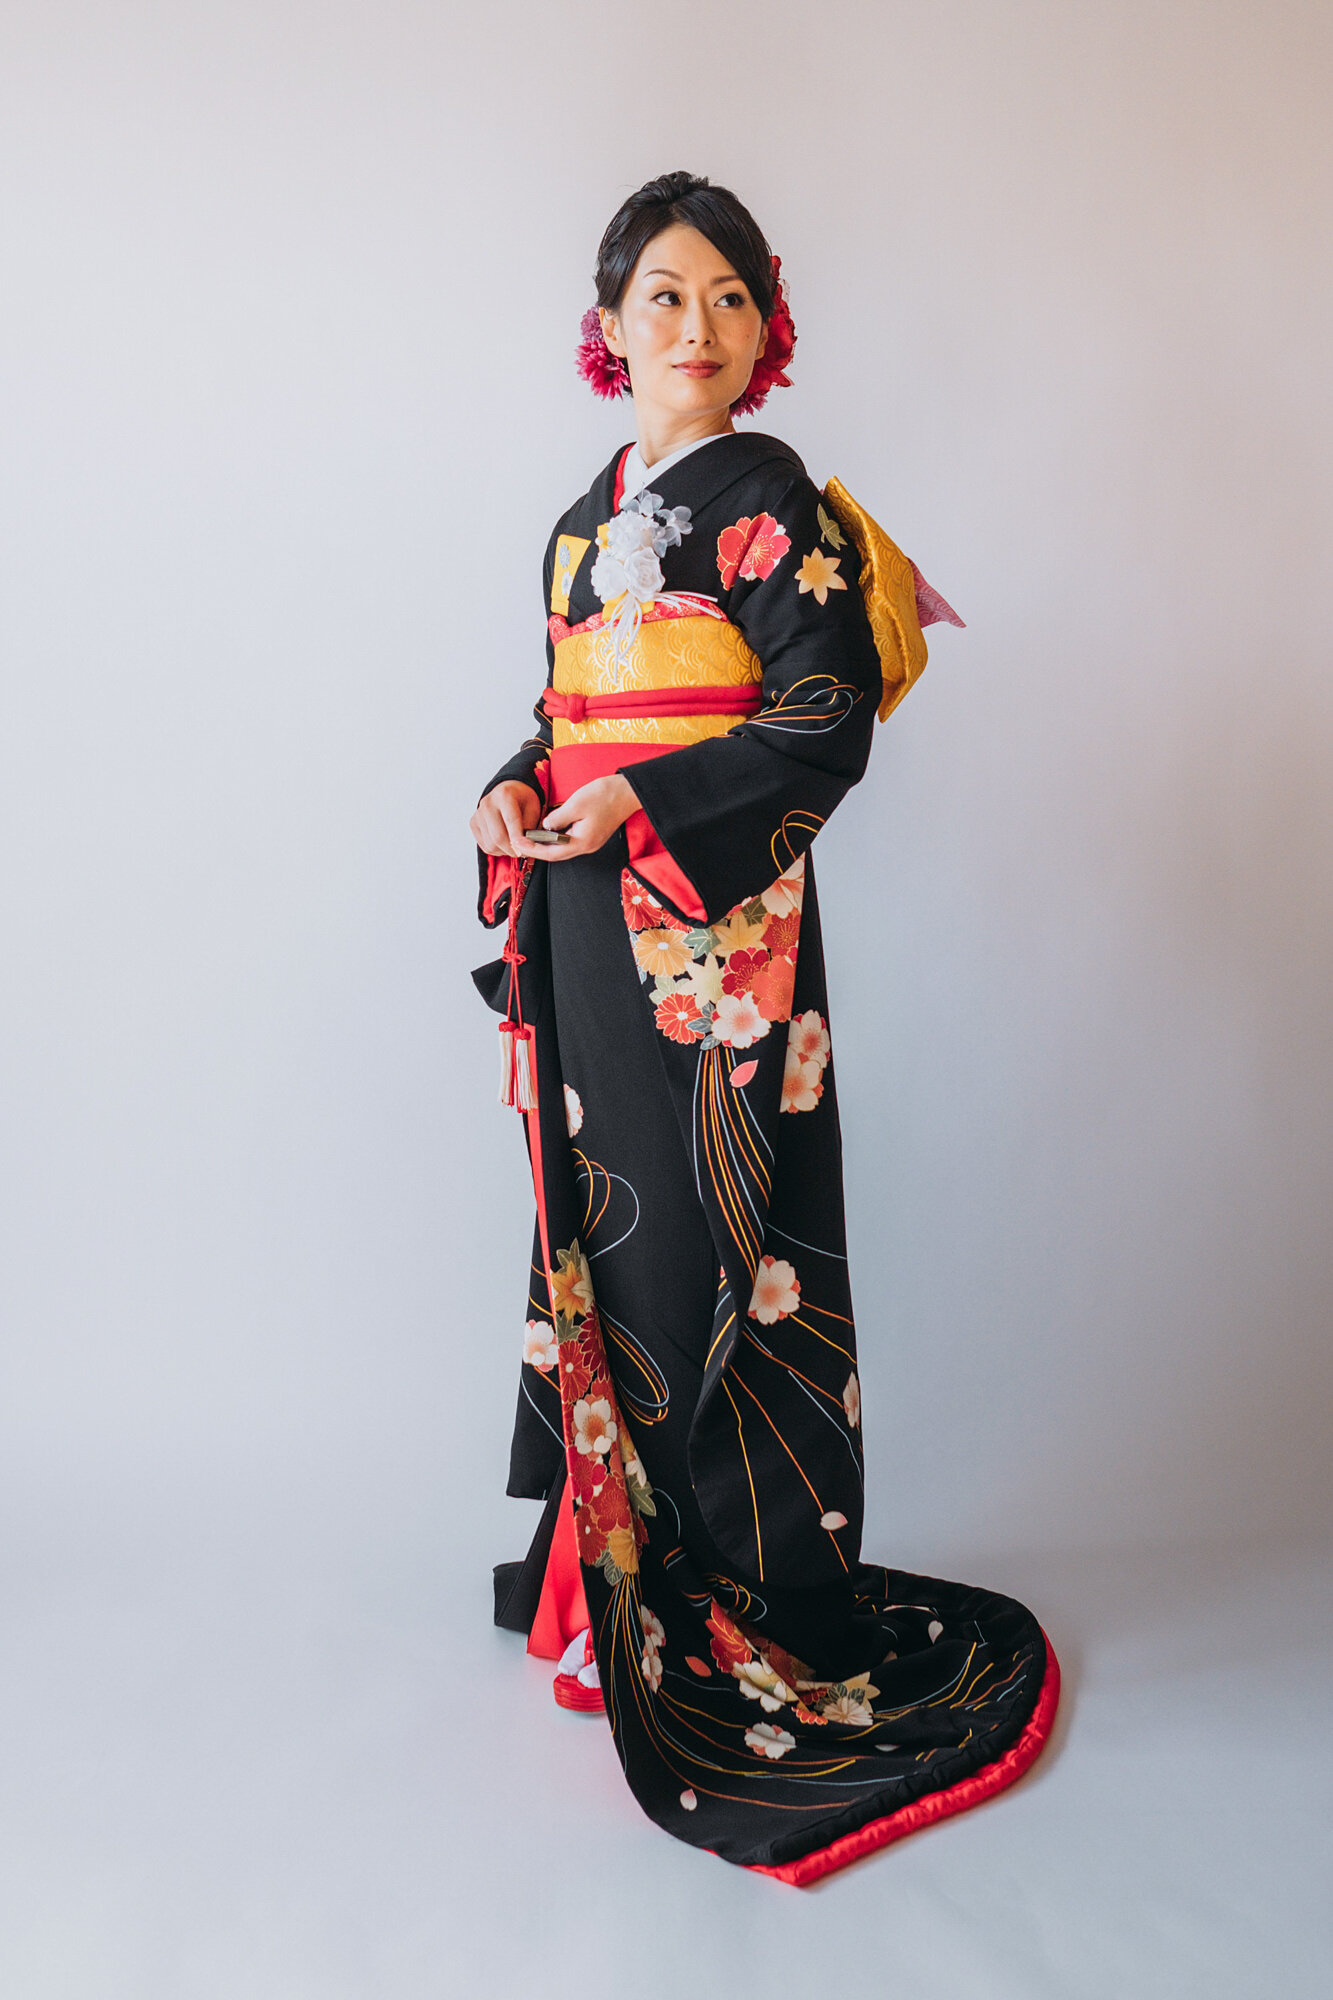 Japanese_bride_kimono-10.jpg